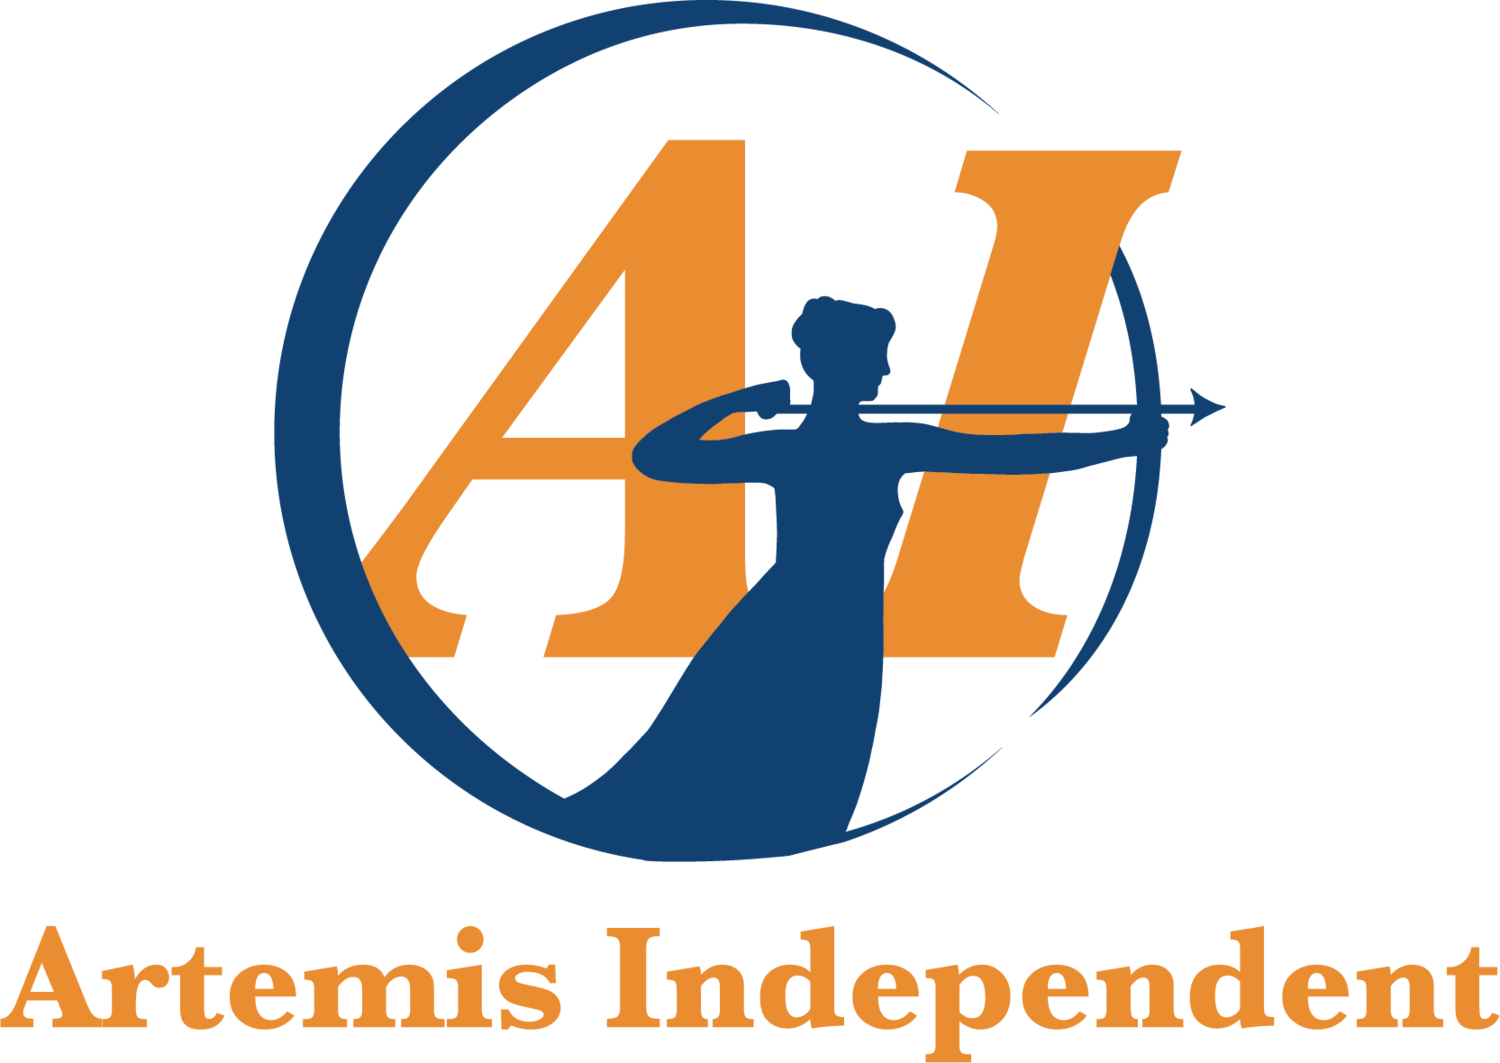 Artemis Independent